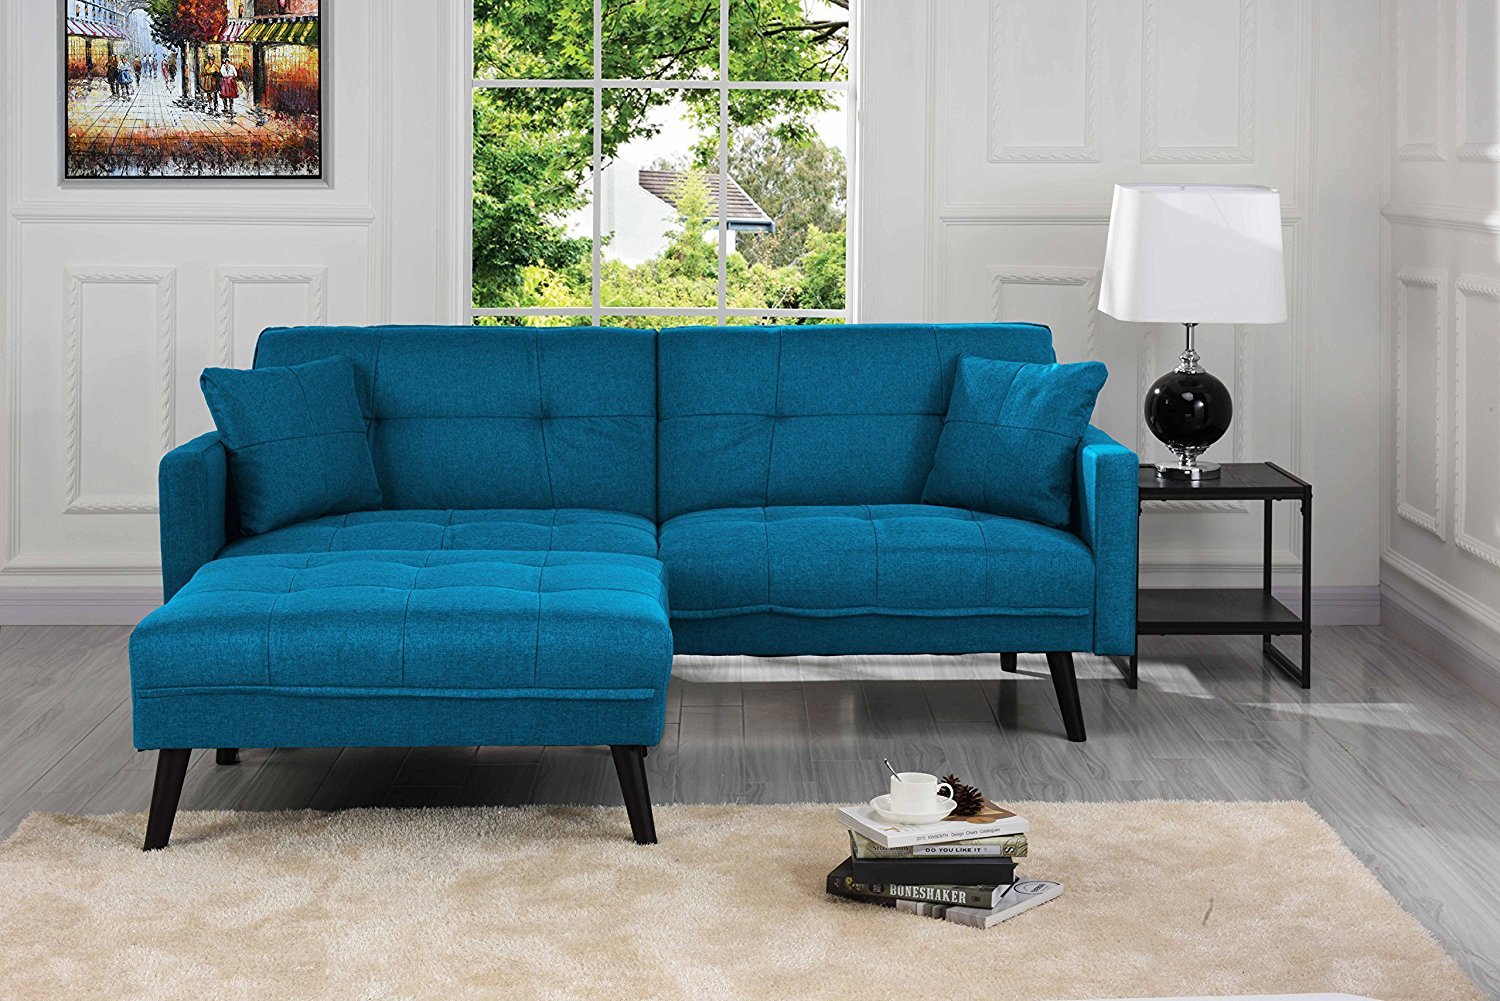 mid century modern futon sofa bed